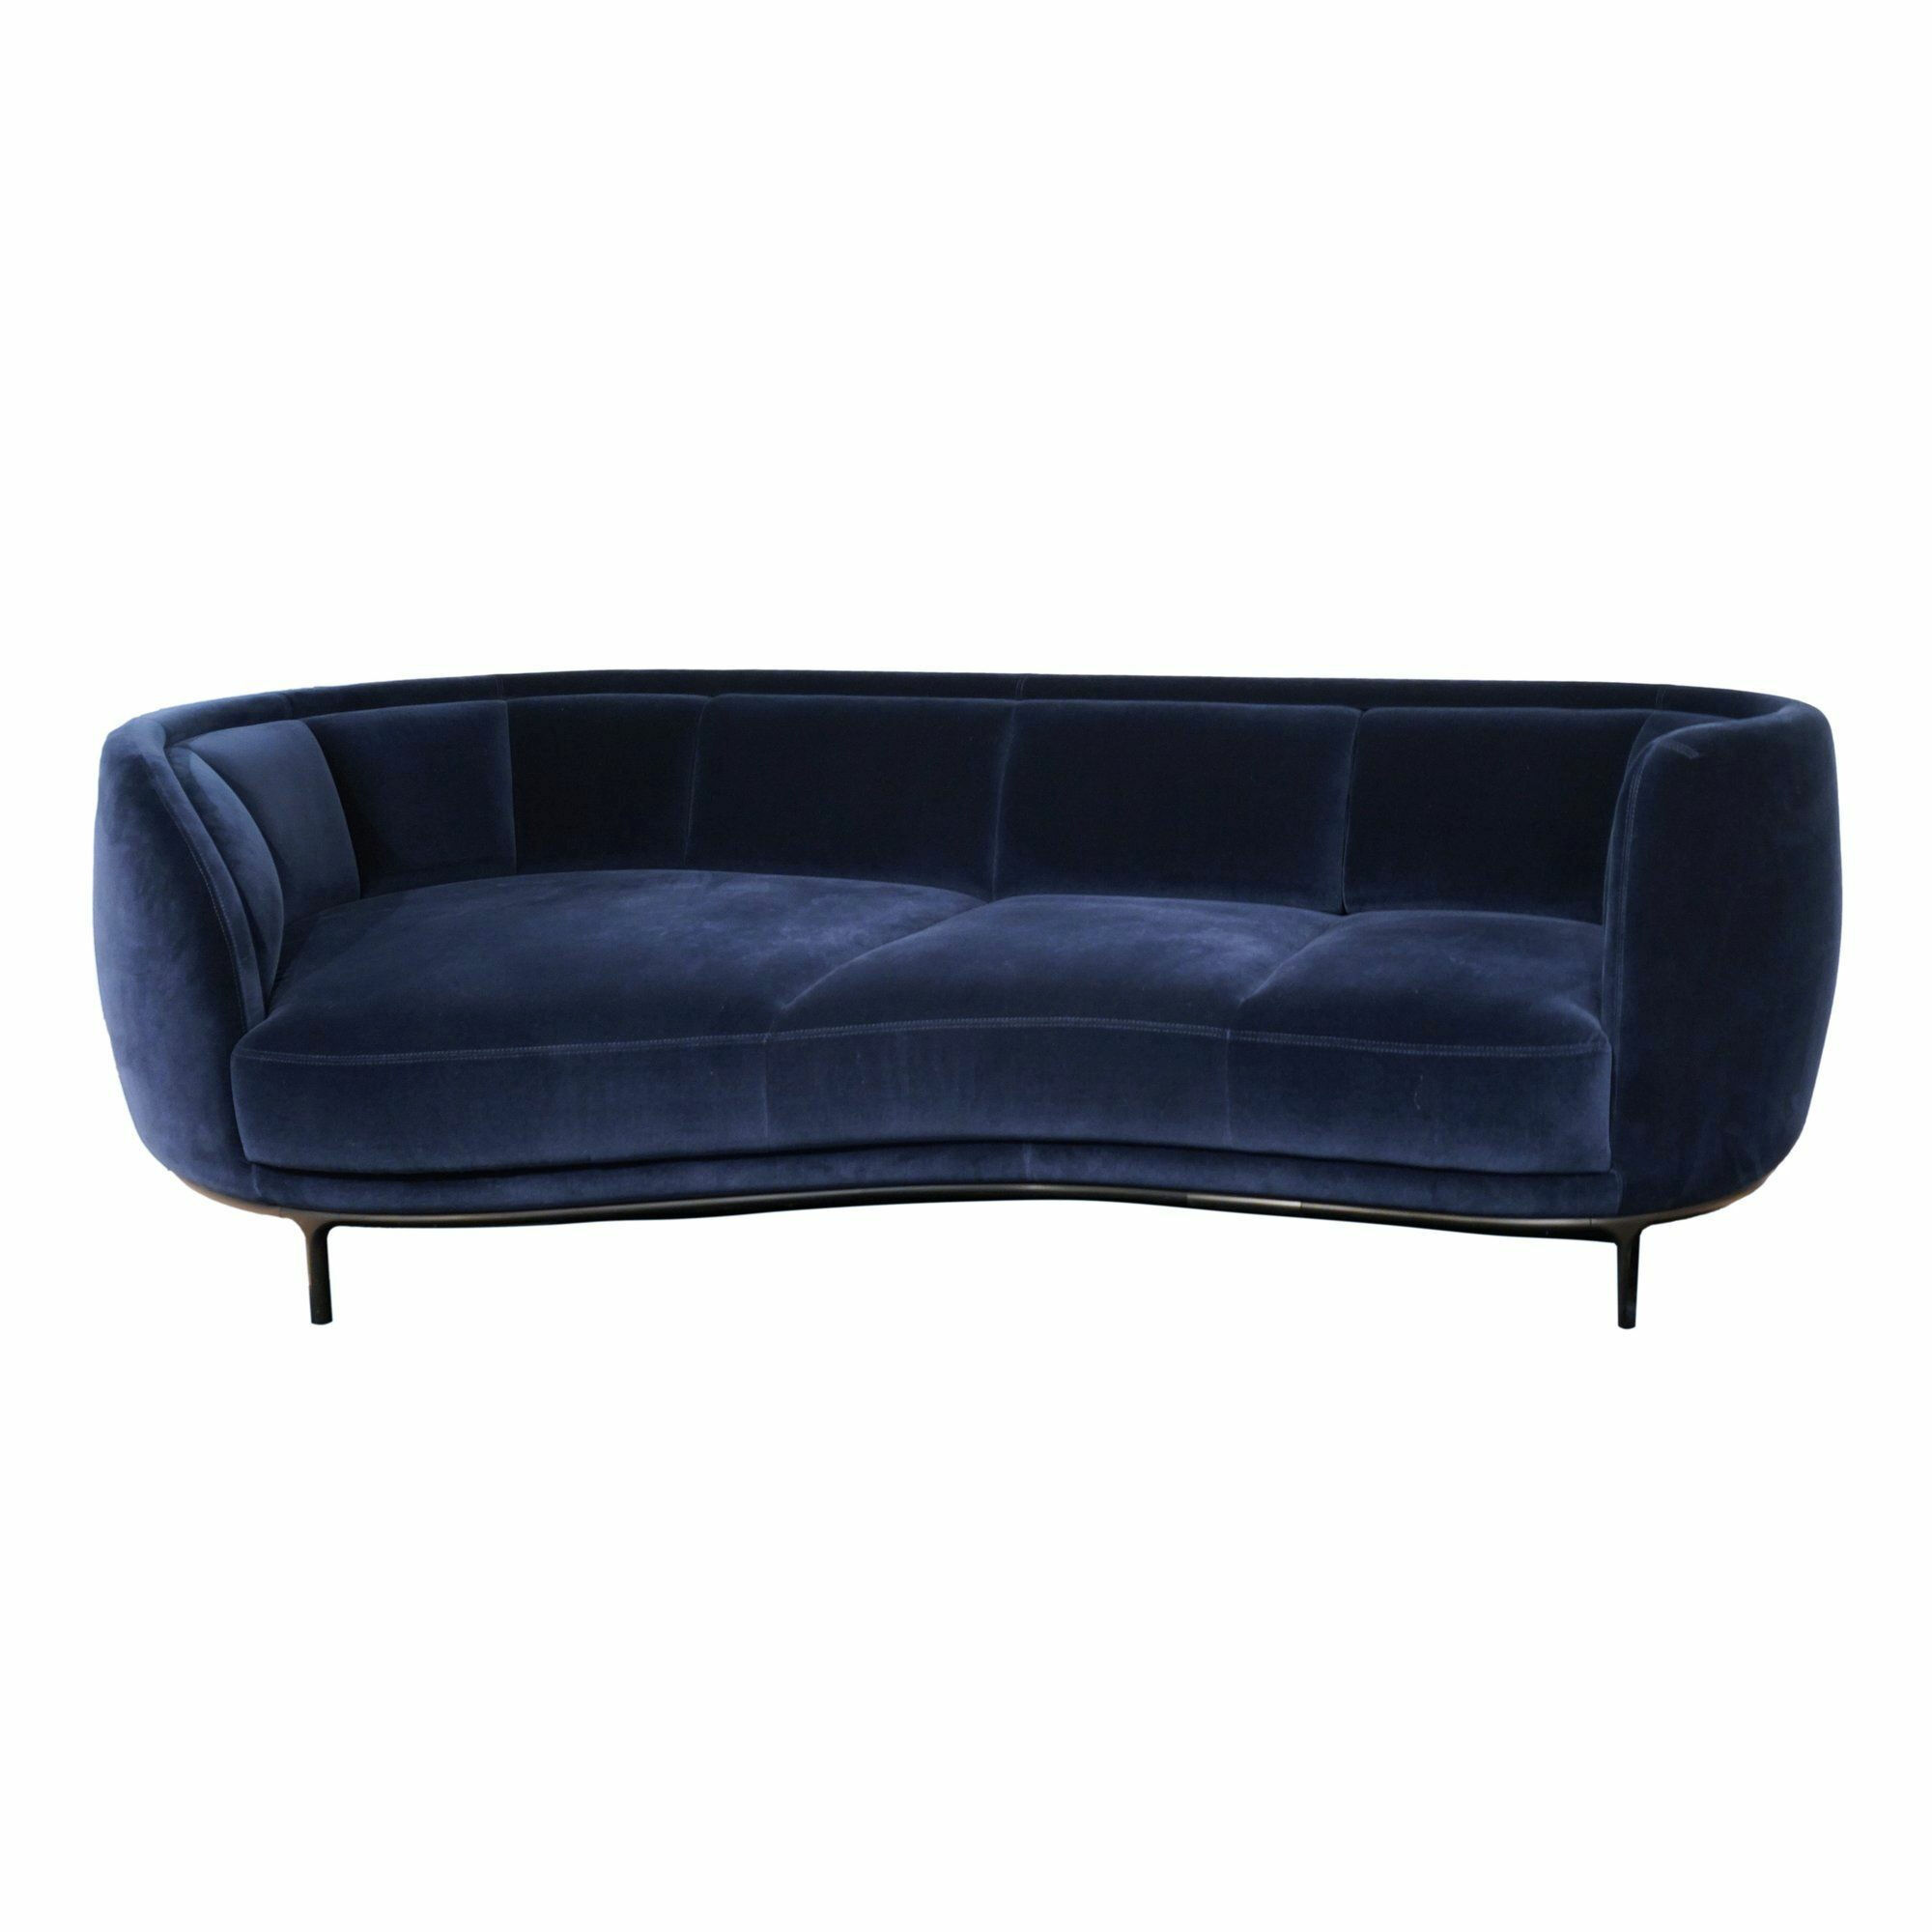 wittmann-sofa-vuelta-lounge-stoff-velvet-navy-cat-e-blau-fuesse-bronze-pulverbeschichtet-mf-0006056-4